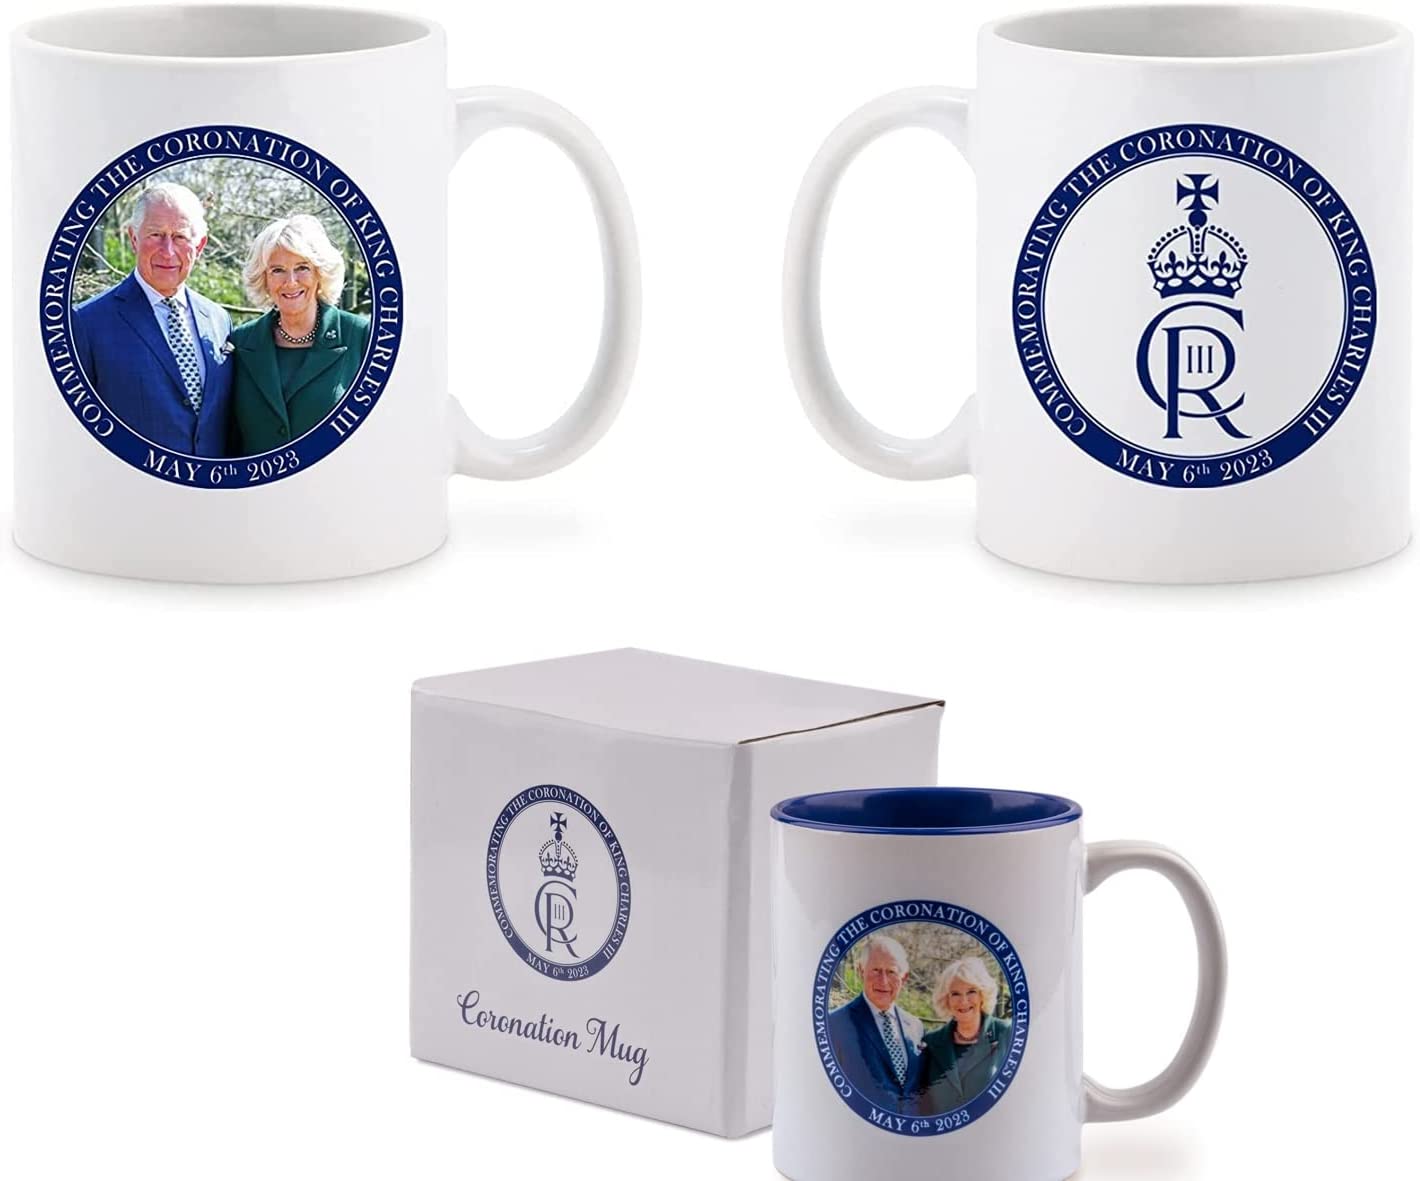 King Charles III and Queen Consort Camilla Portrait Mug Memorabilia King's Coronation Coffee Tea Cup Commemorative Souvenirs Gift His Majesty, White